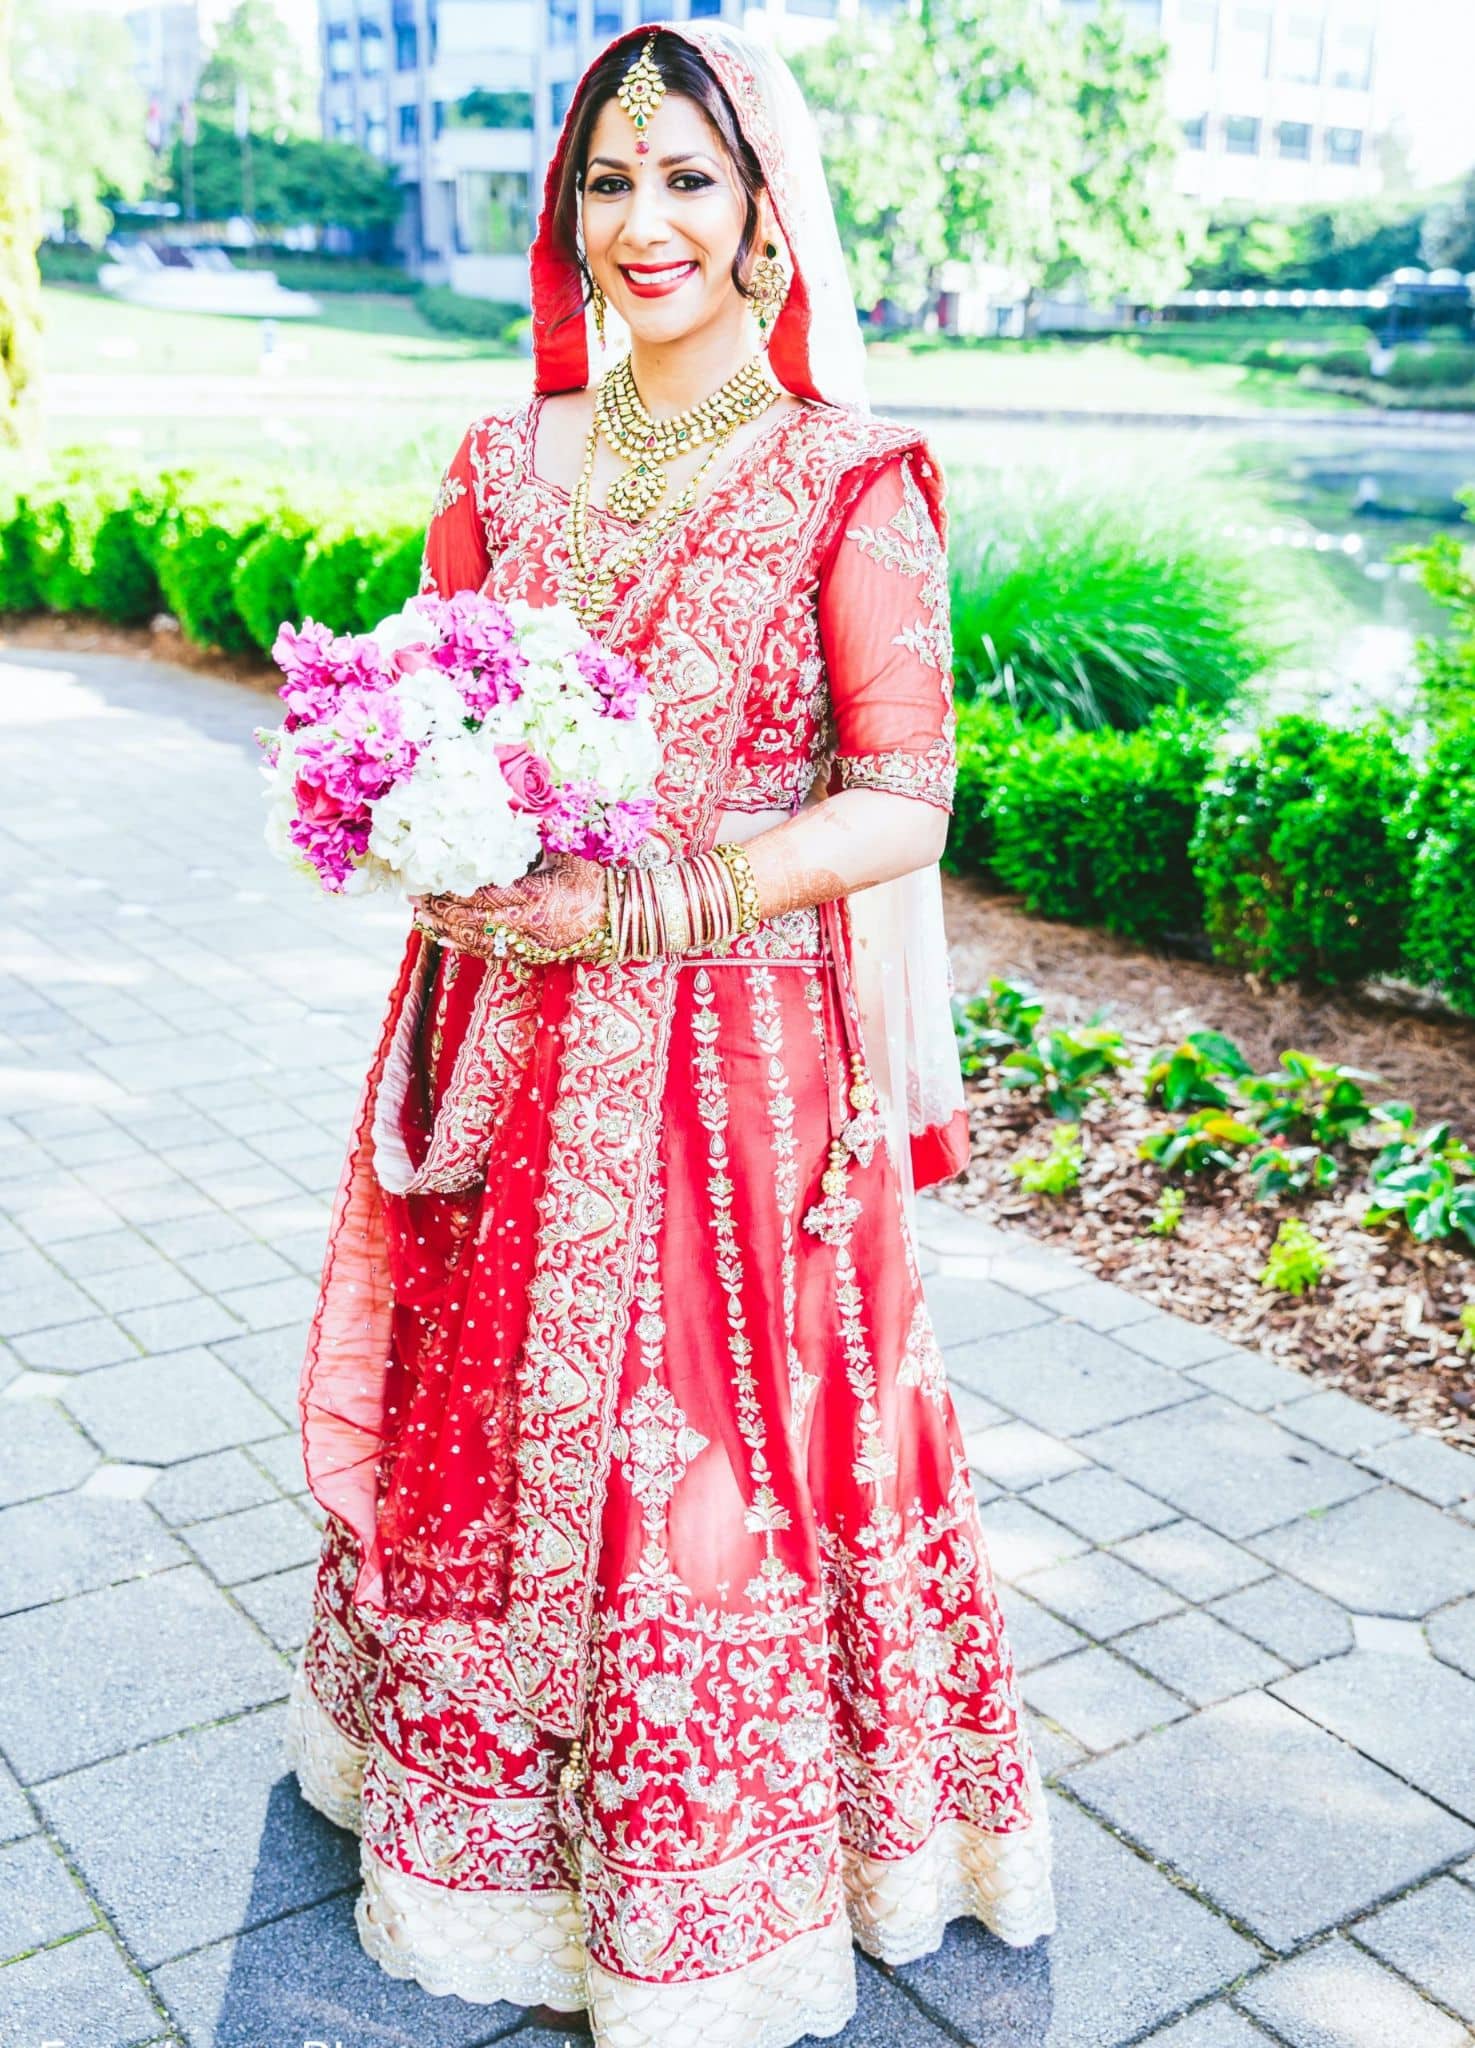 Red Punjabi bridal lehenga with golden embellishments, thread work, and zari work all over